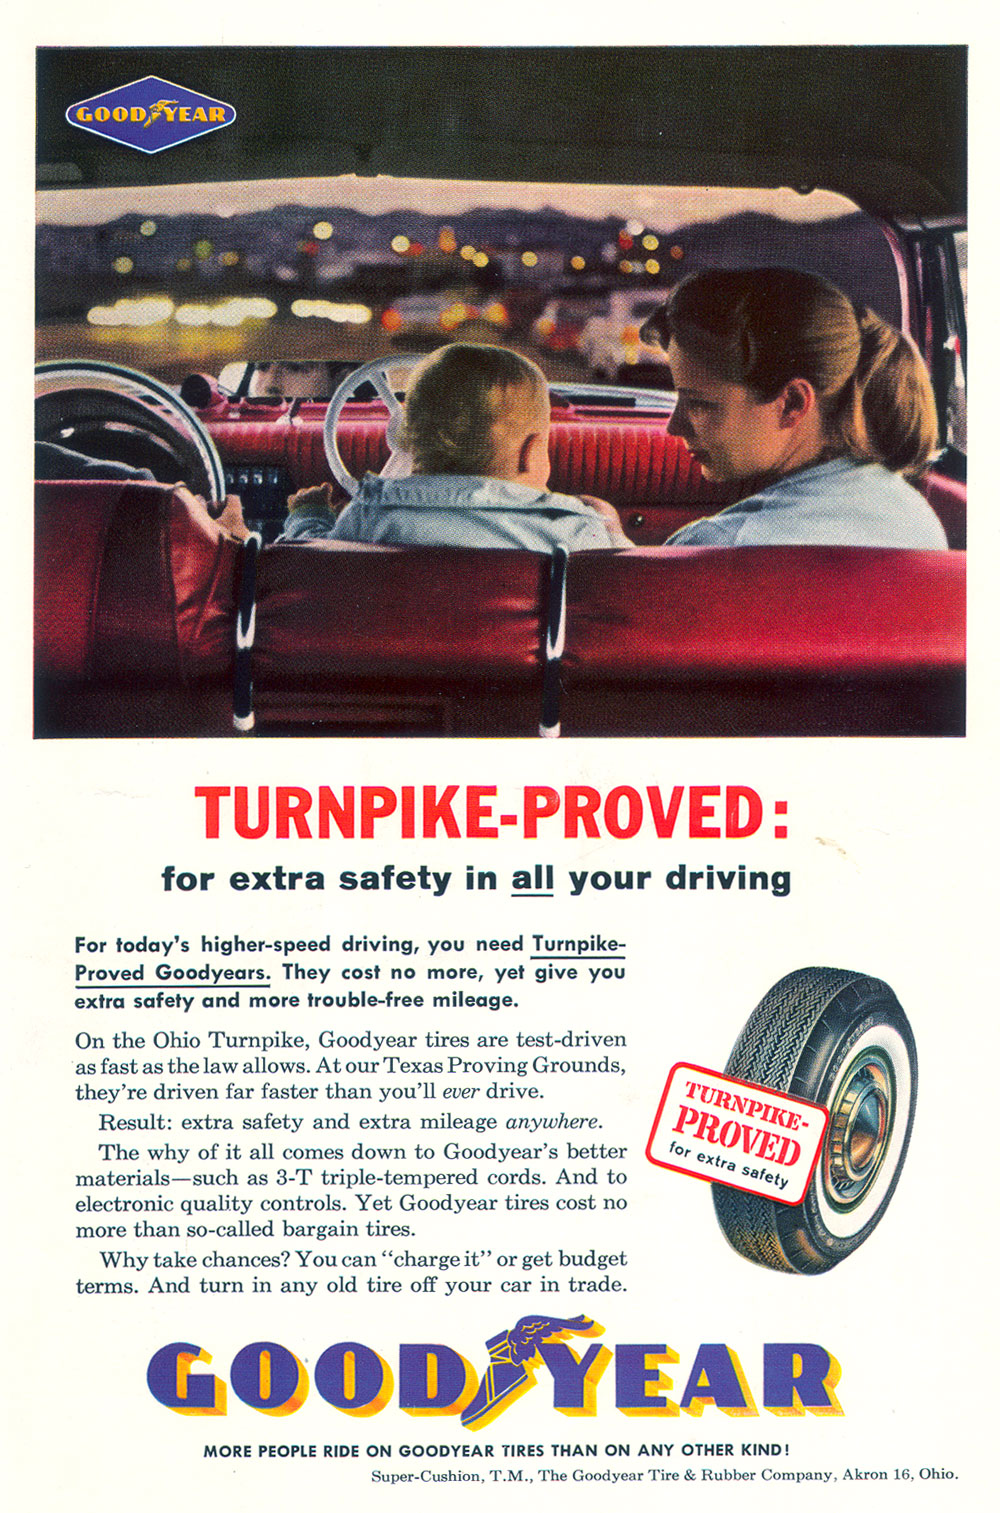 Goodyear tire advertisement